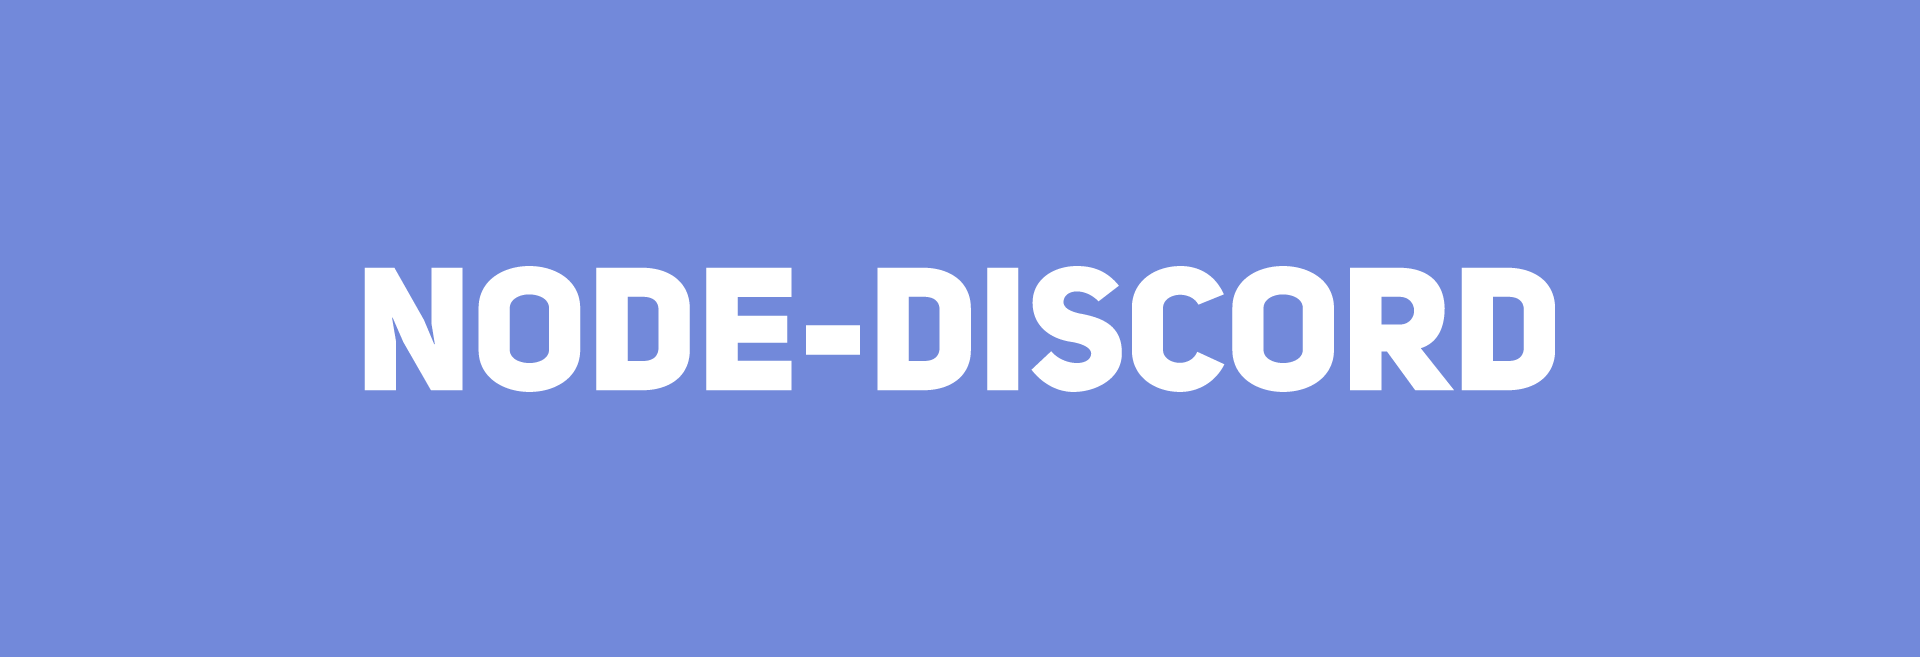 node-discord